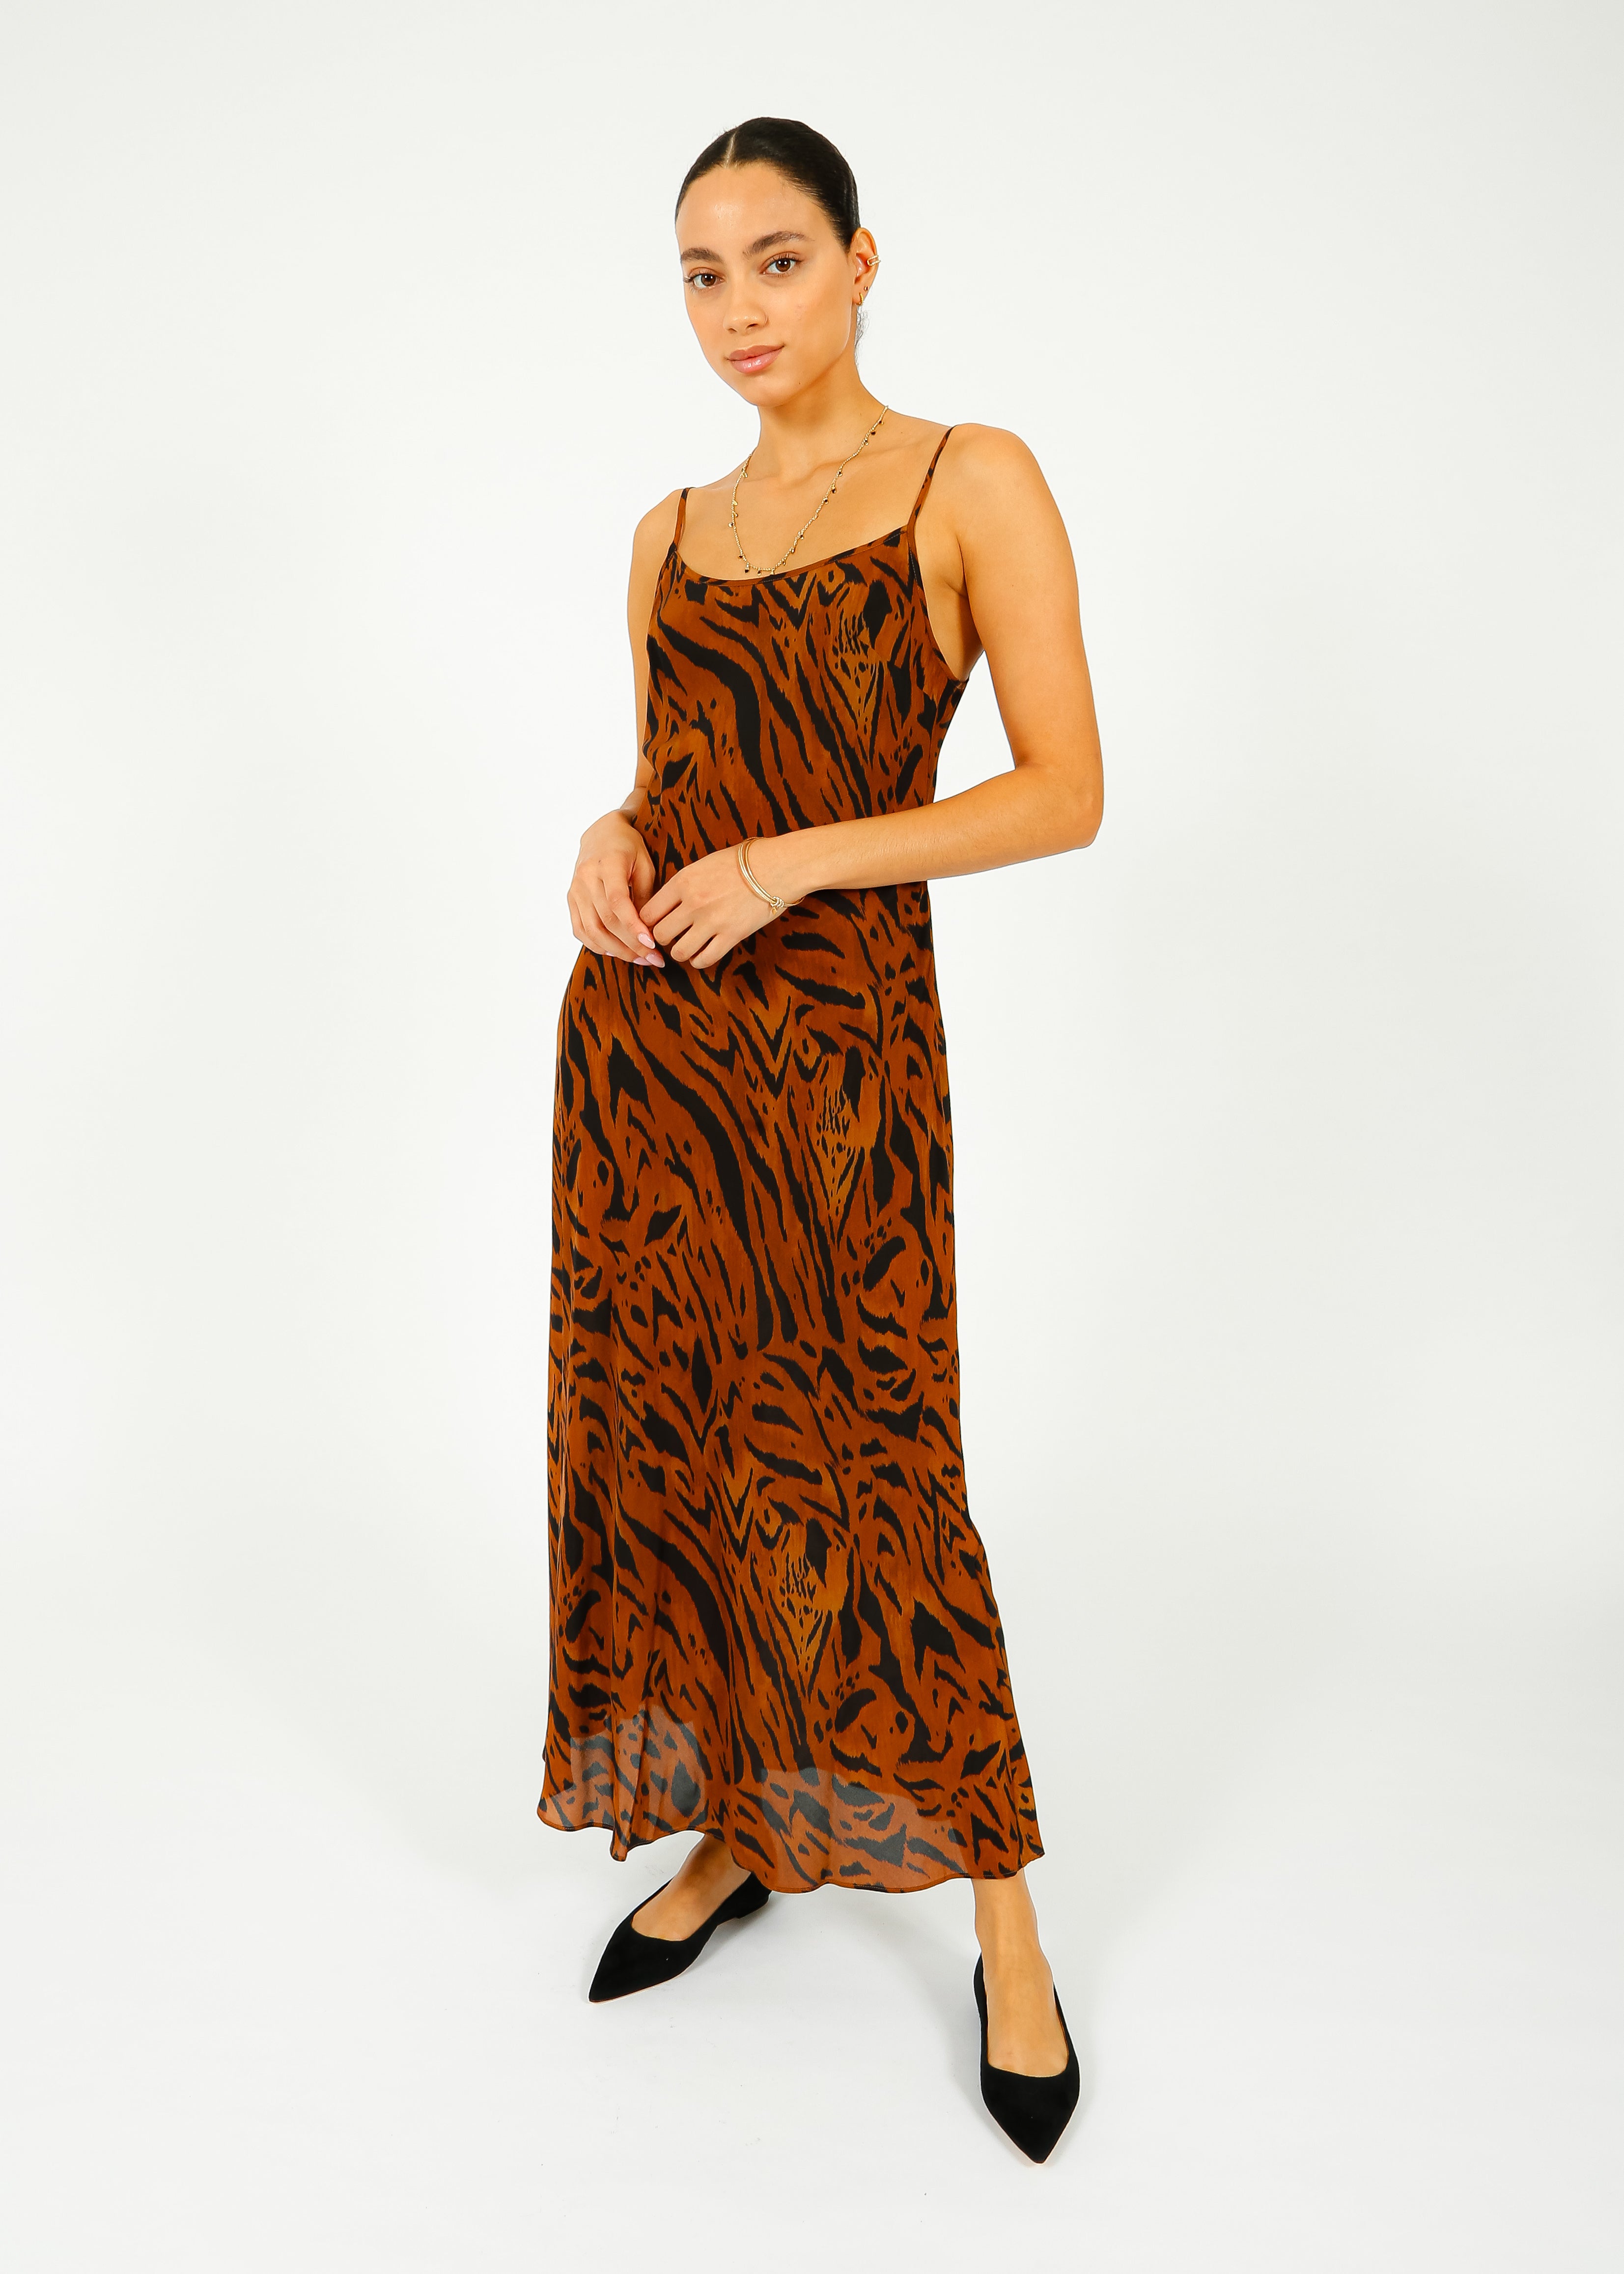 RIXO Holly Dress in Tiger Stripe